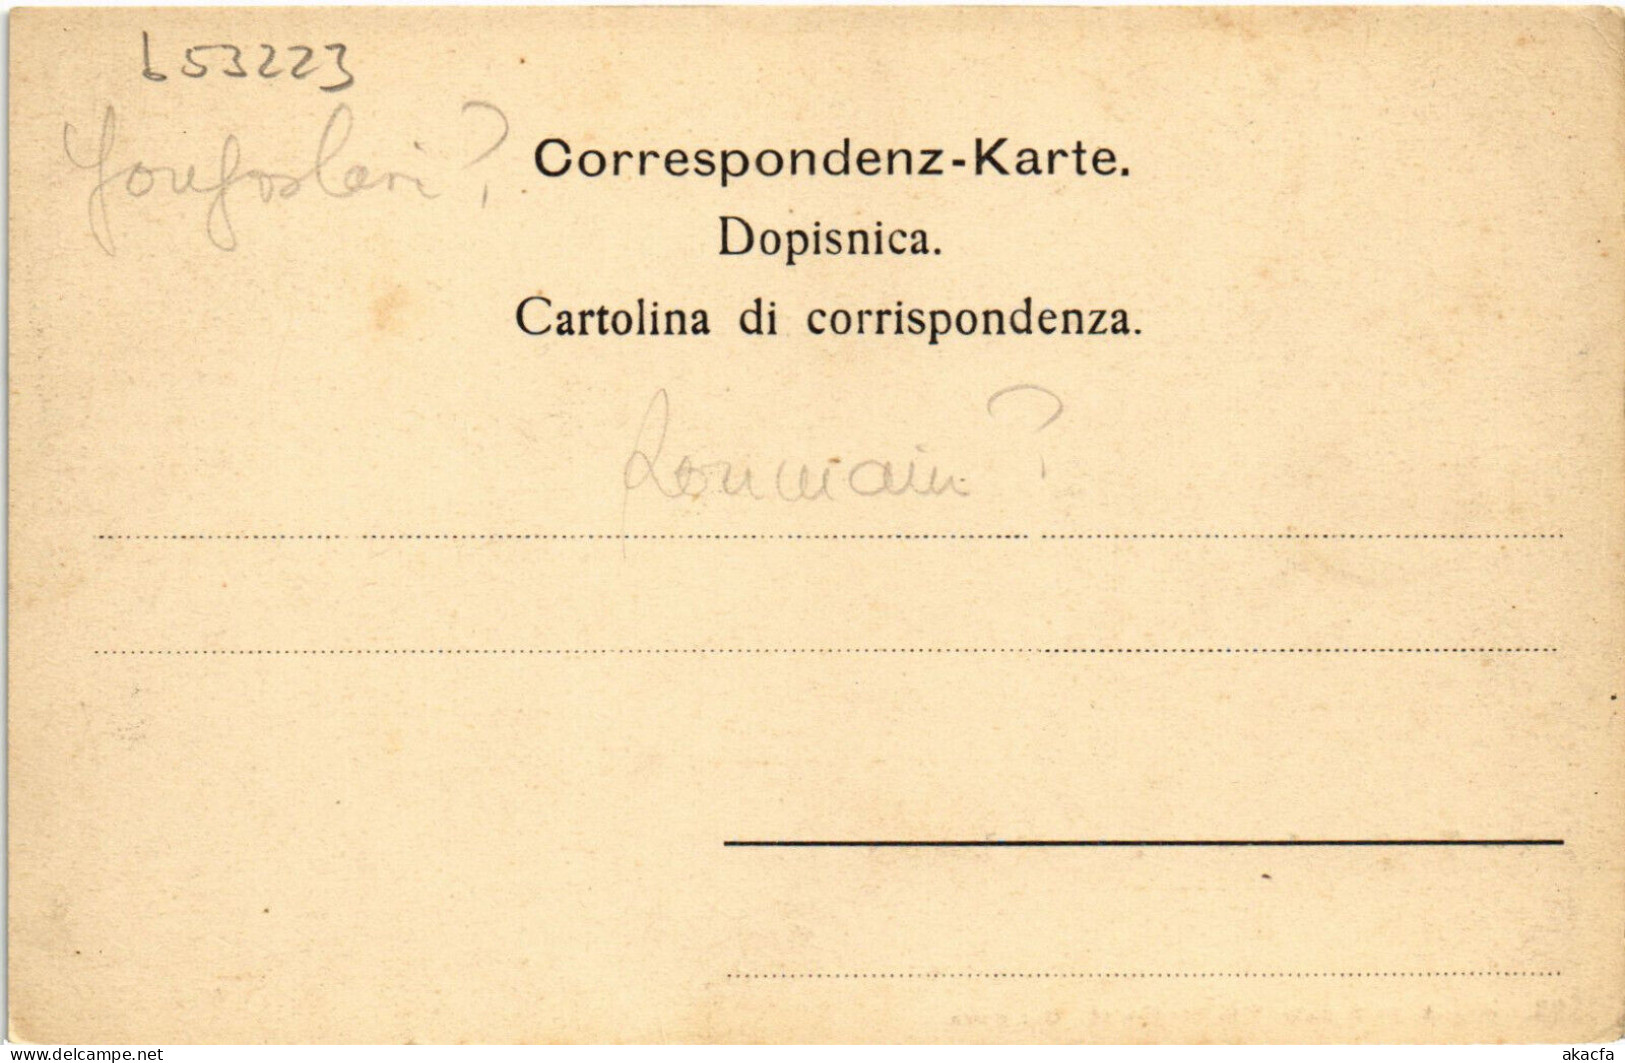 PC CROATIA, IKA, TOTALANSICHT WEGE NACH LOVRANA, Vintage Postcard (b53223) - Croatia